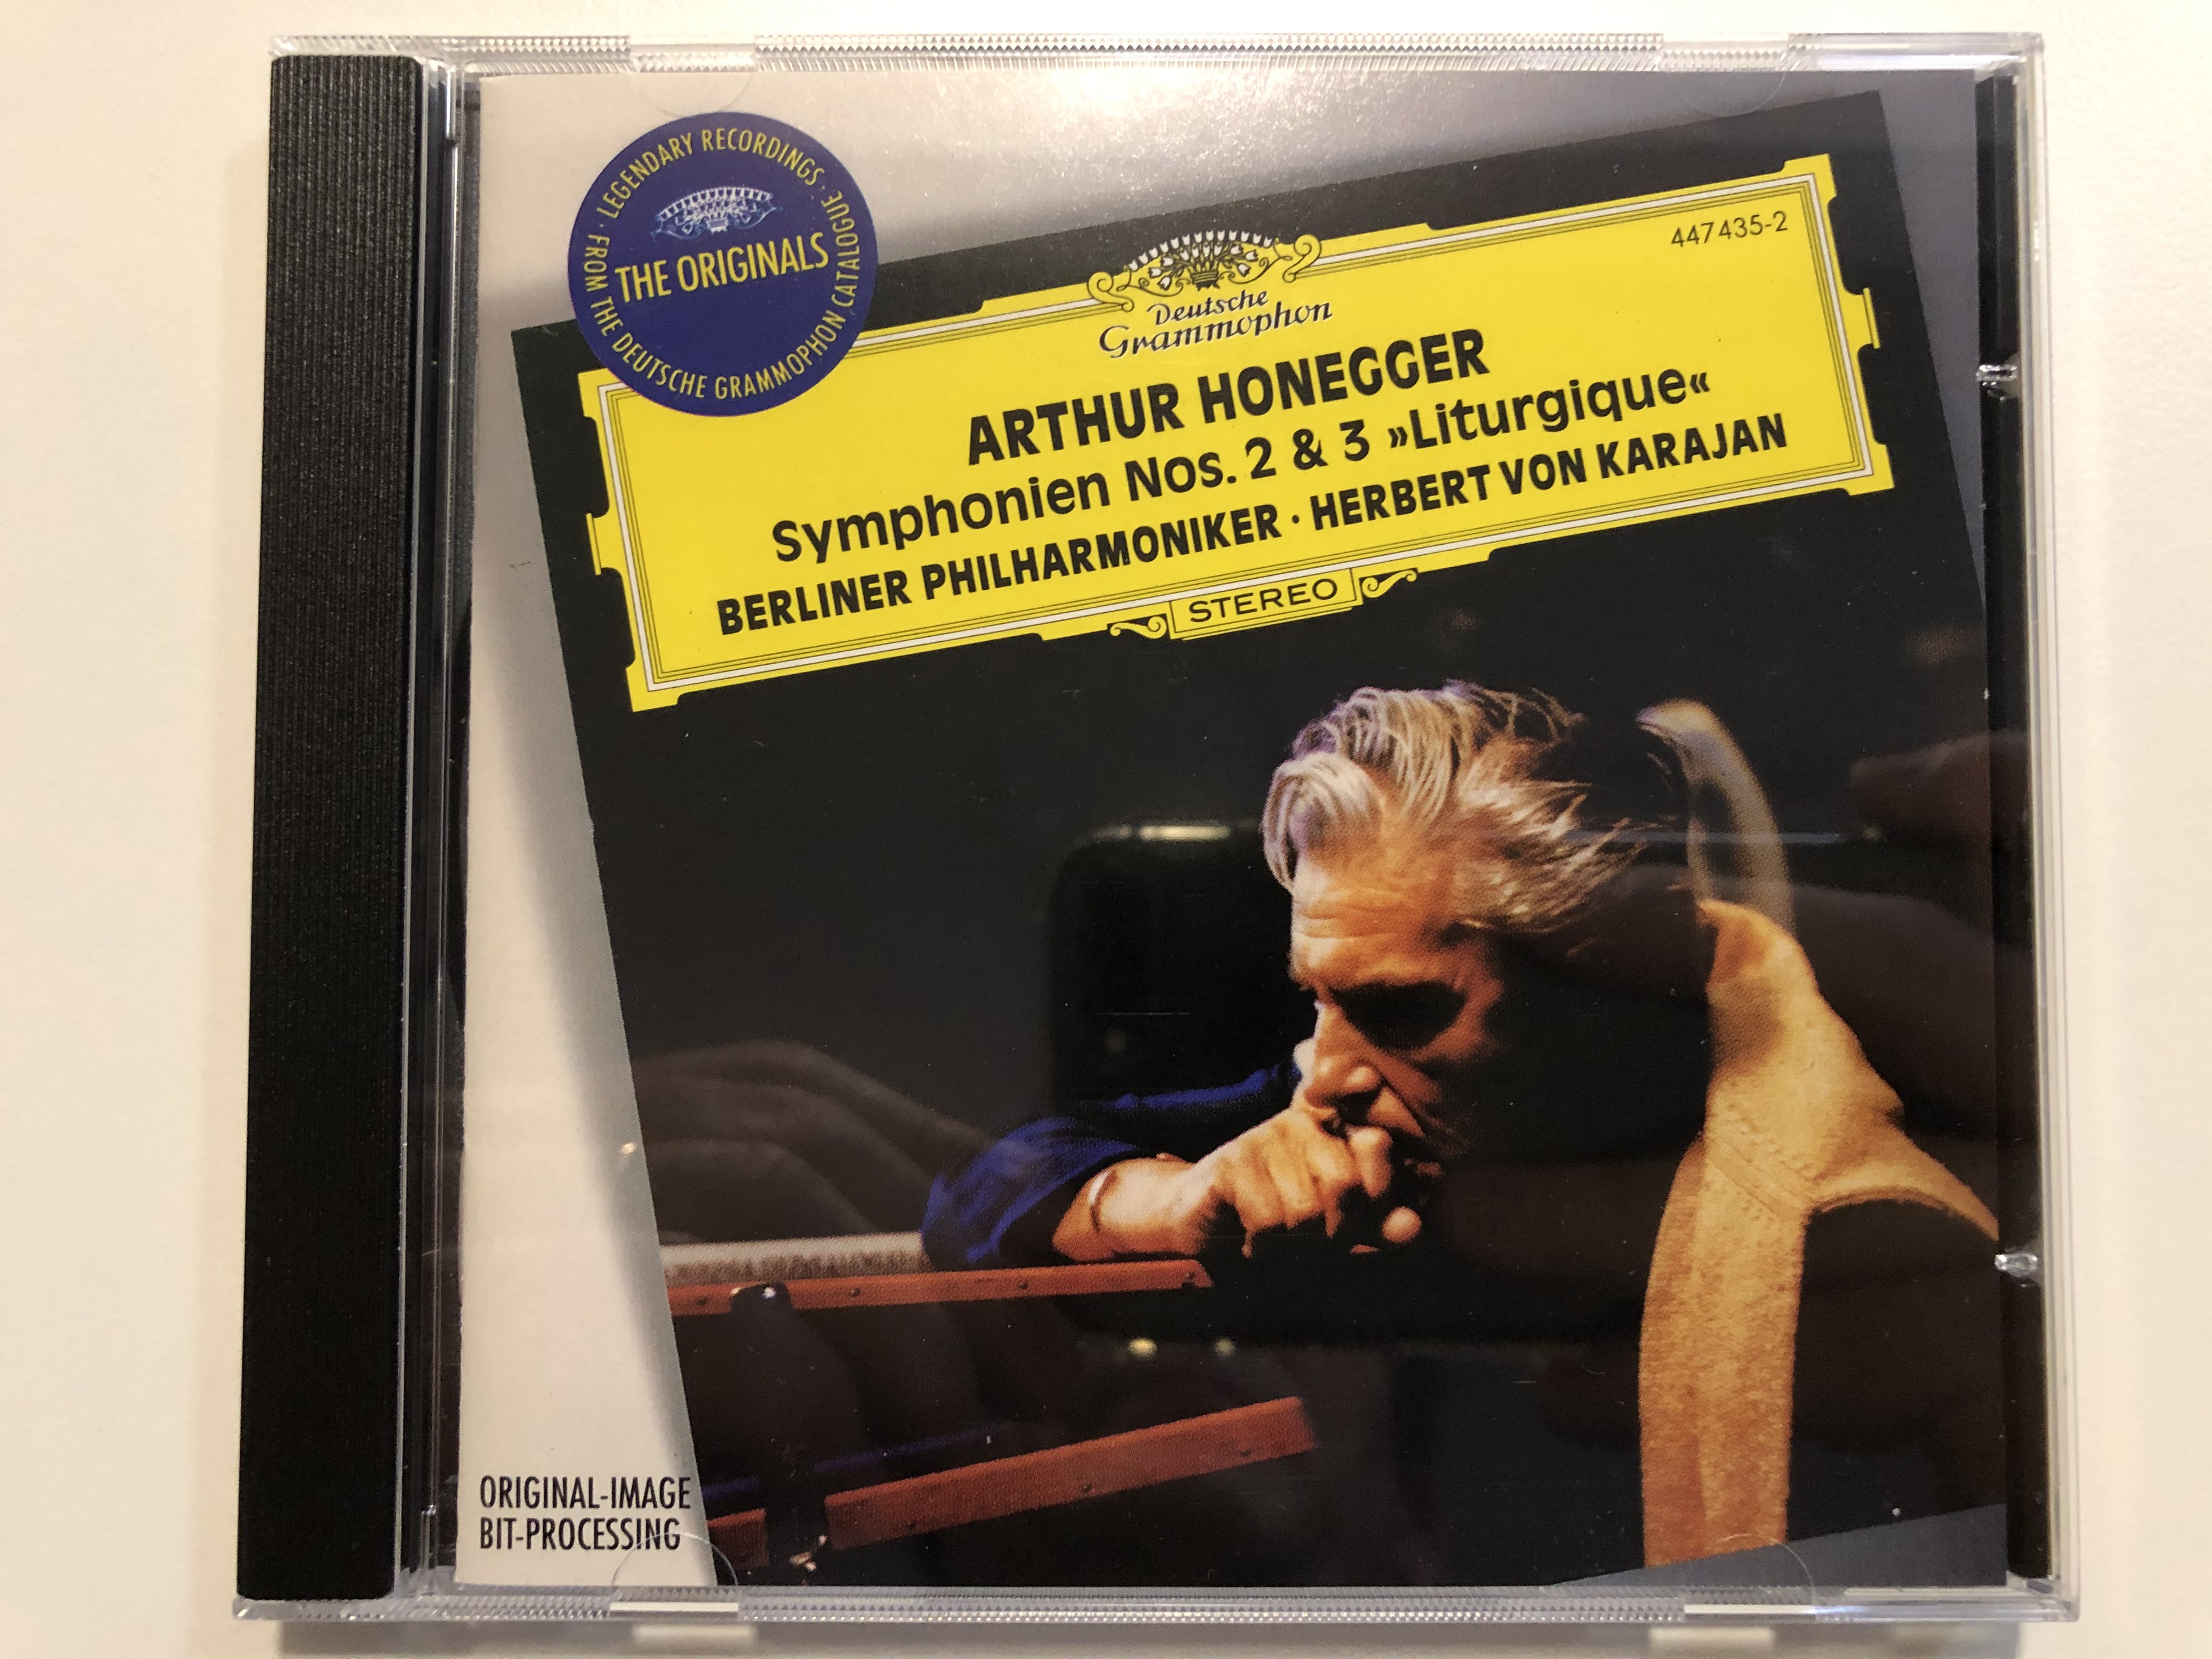 arthur-honegger-symphonien-nos.-2-3-liturgique-berliner-philharmoniker-herbert-von-karajan-deutsche-grammophon-audio-cd-stereo-447-435-2-1-.jpg